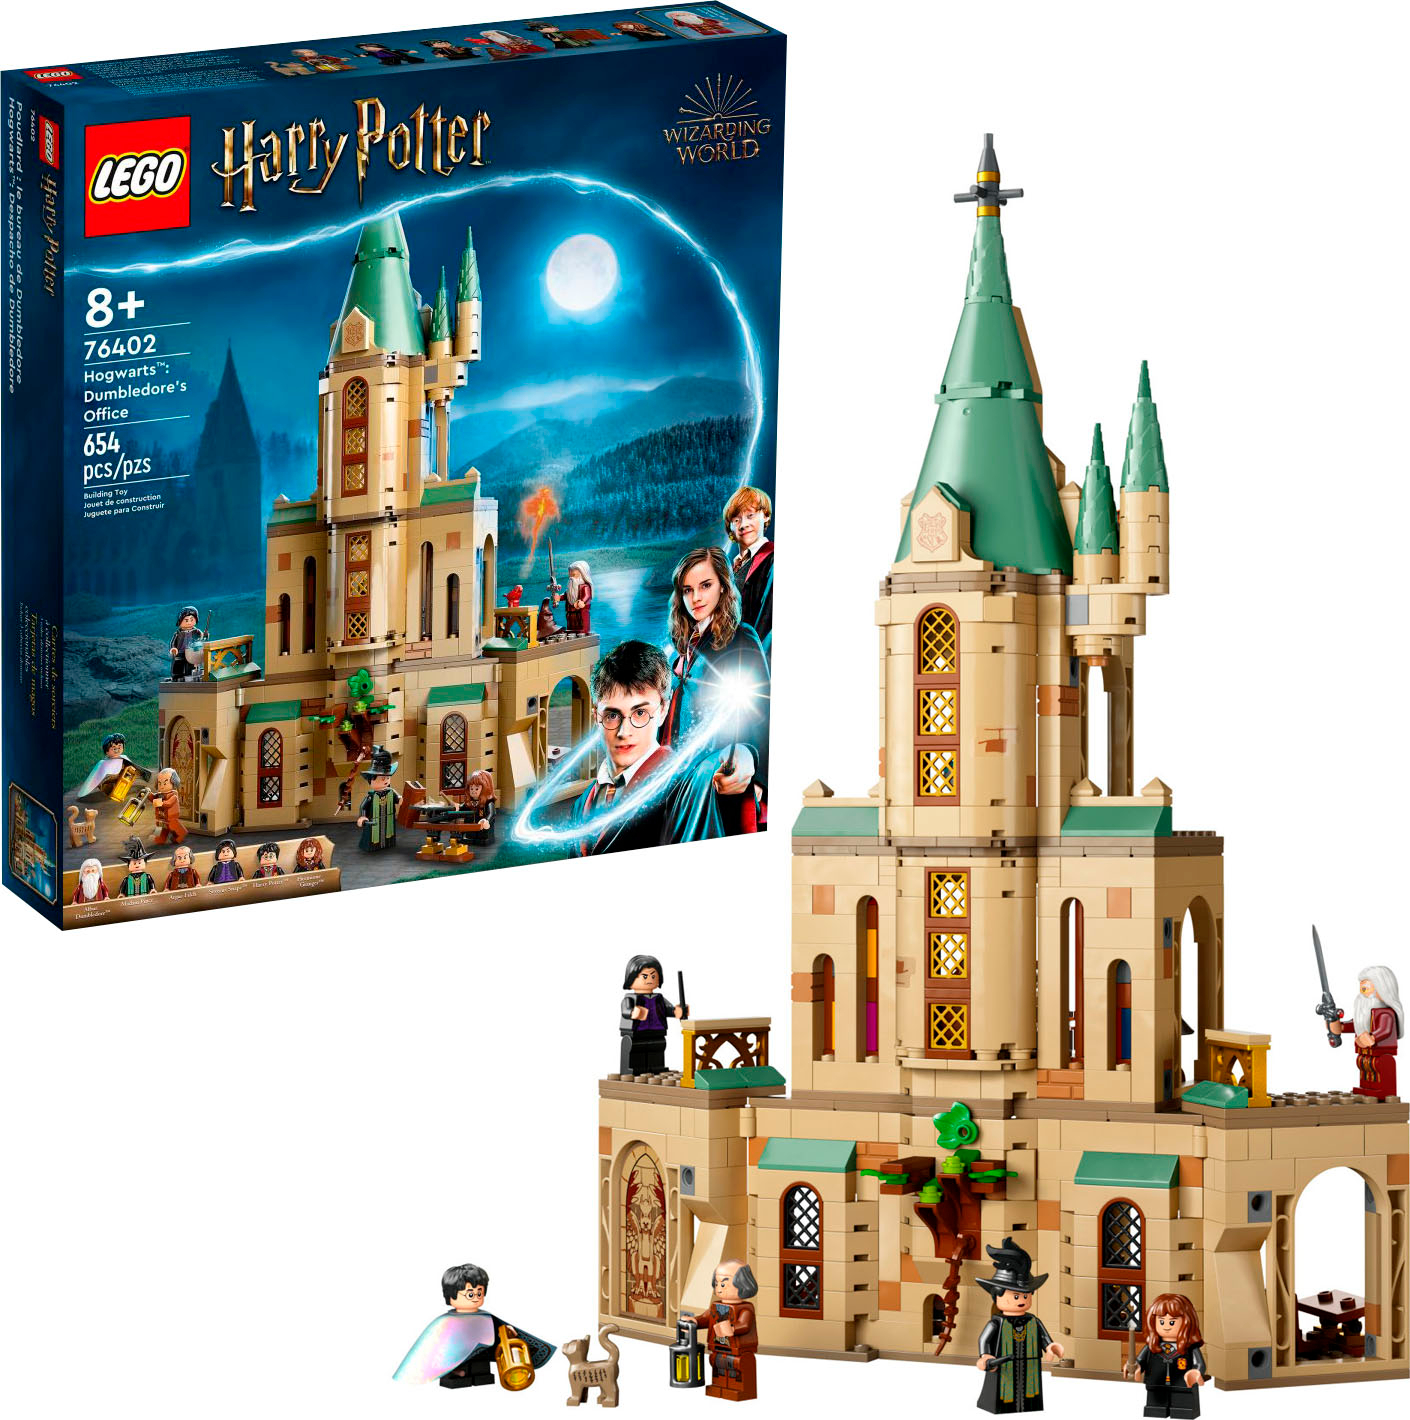 LEGO Harry Potter Hogwarts: Dumbledore's Office 76402 6378982 - Best Buy